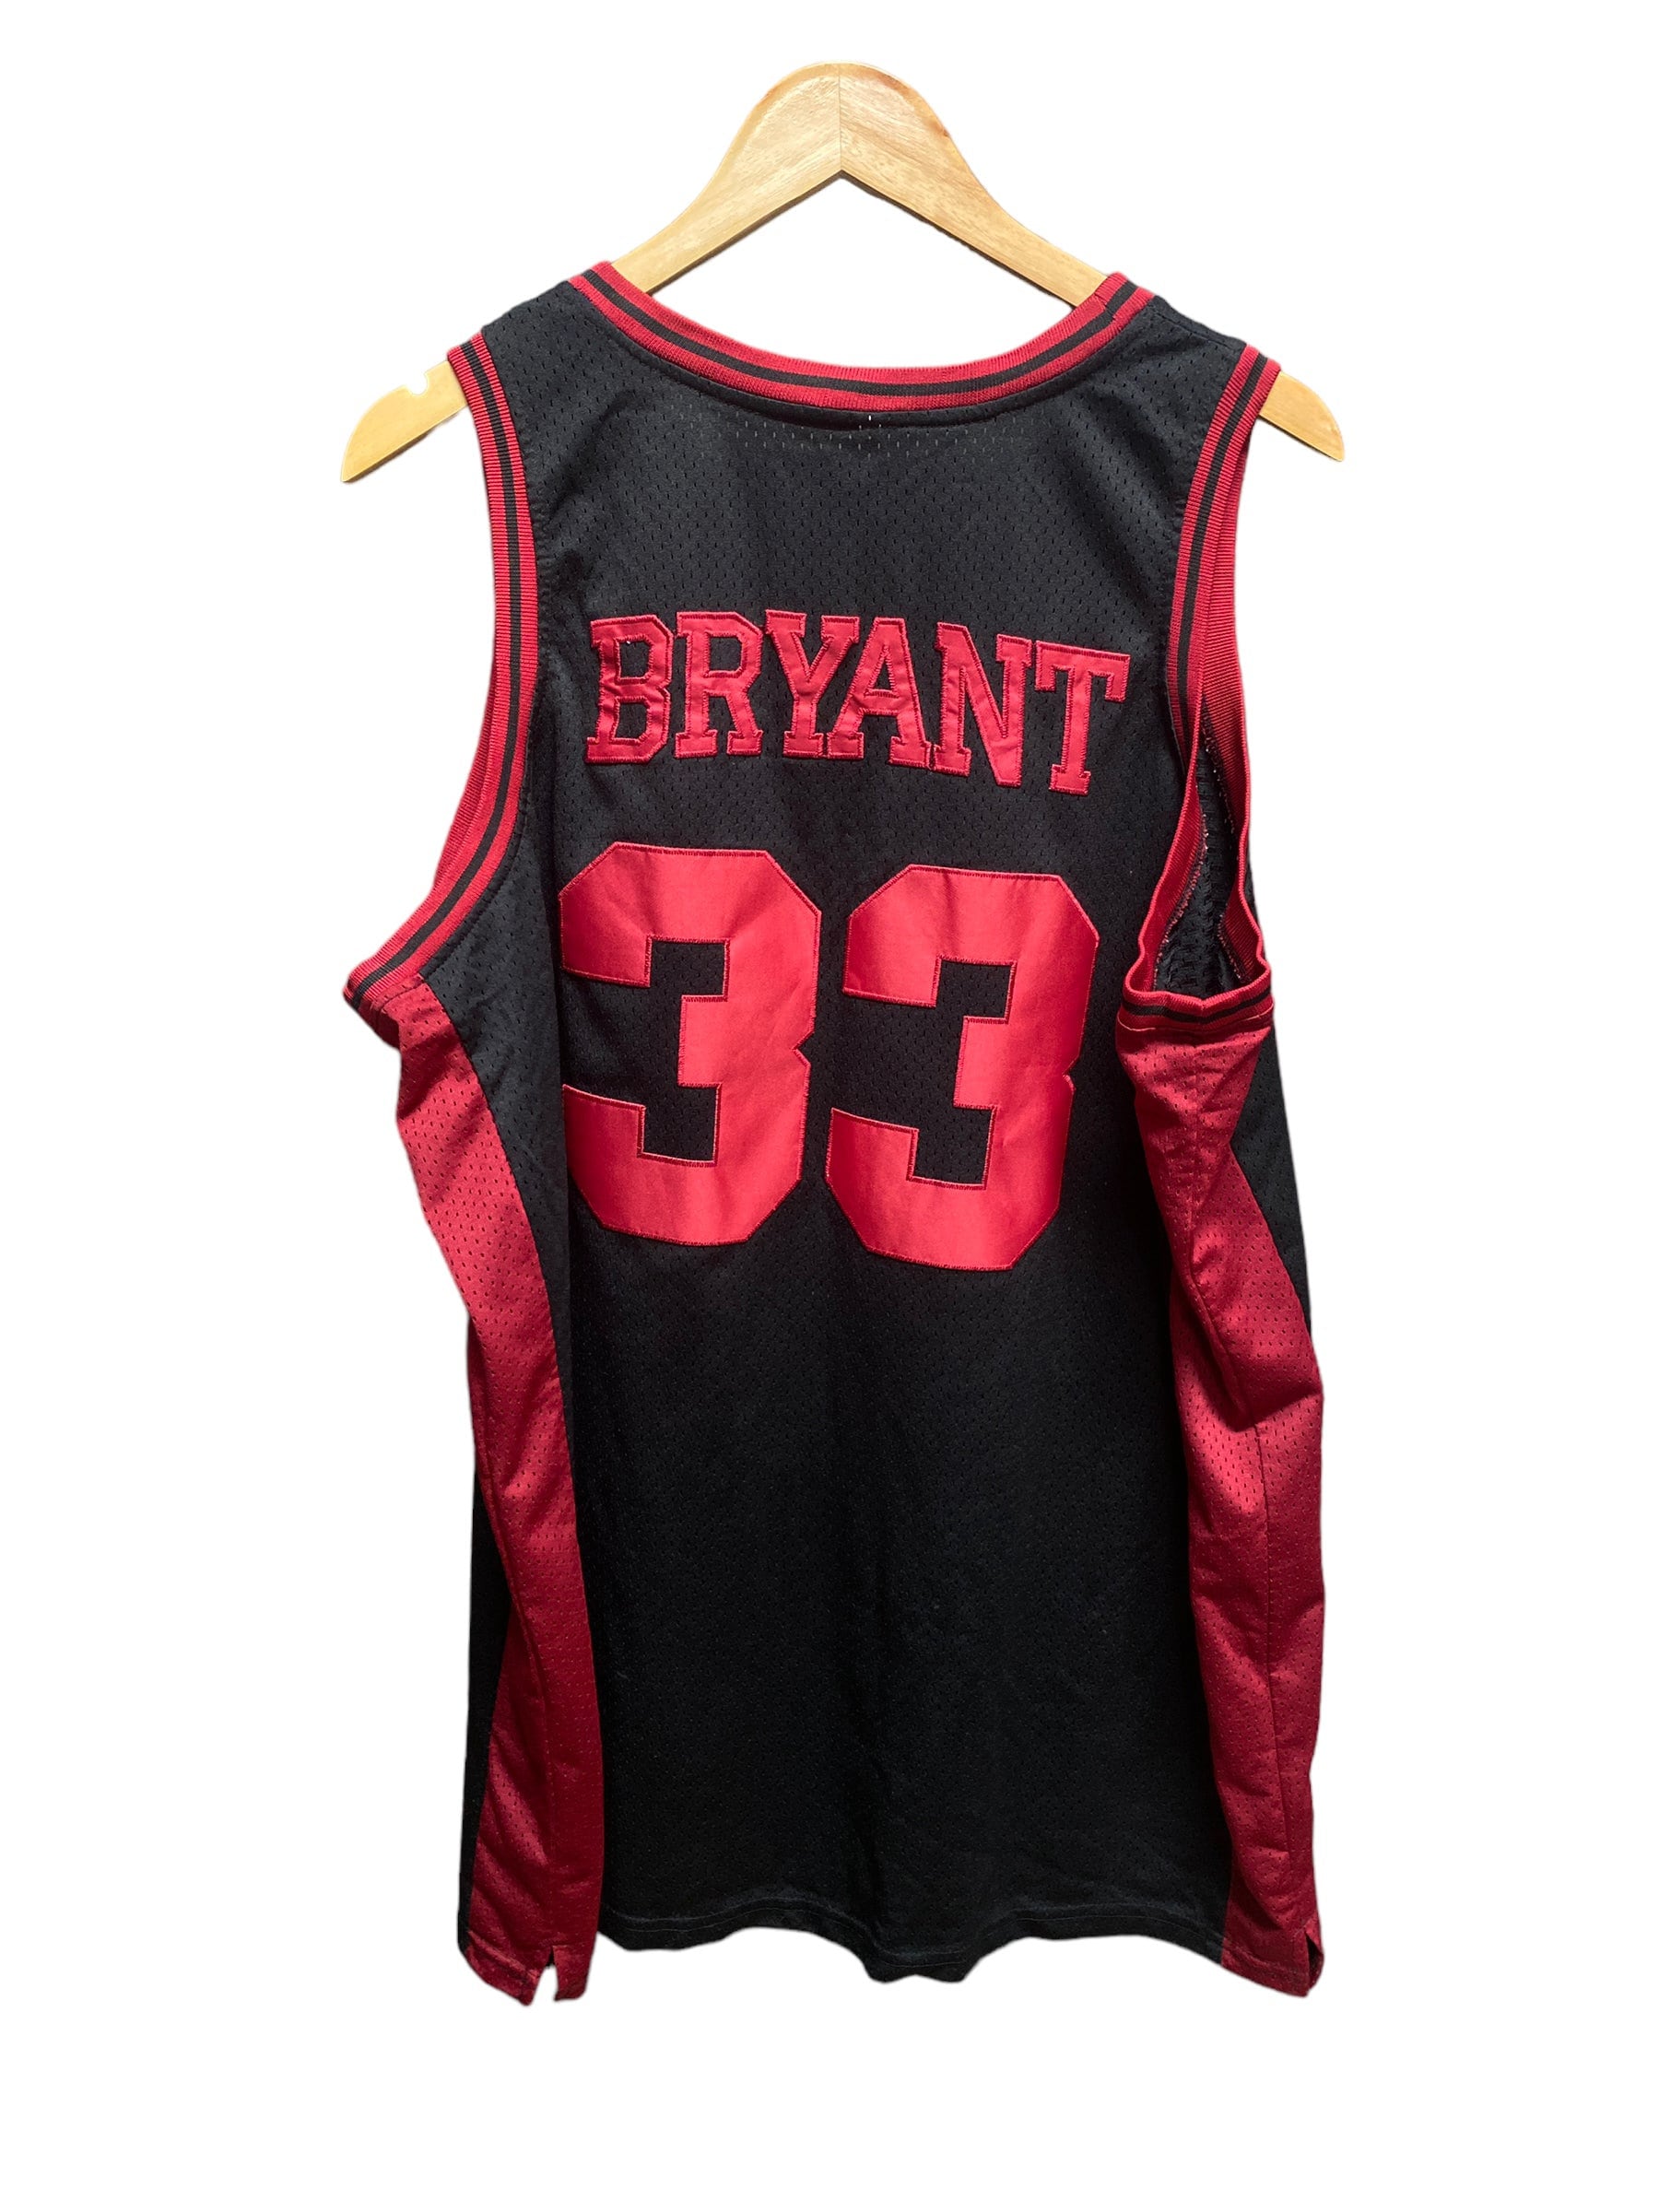 High School Basketball Jersey Kobe Bryant #33 McDonald S All-American Game White